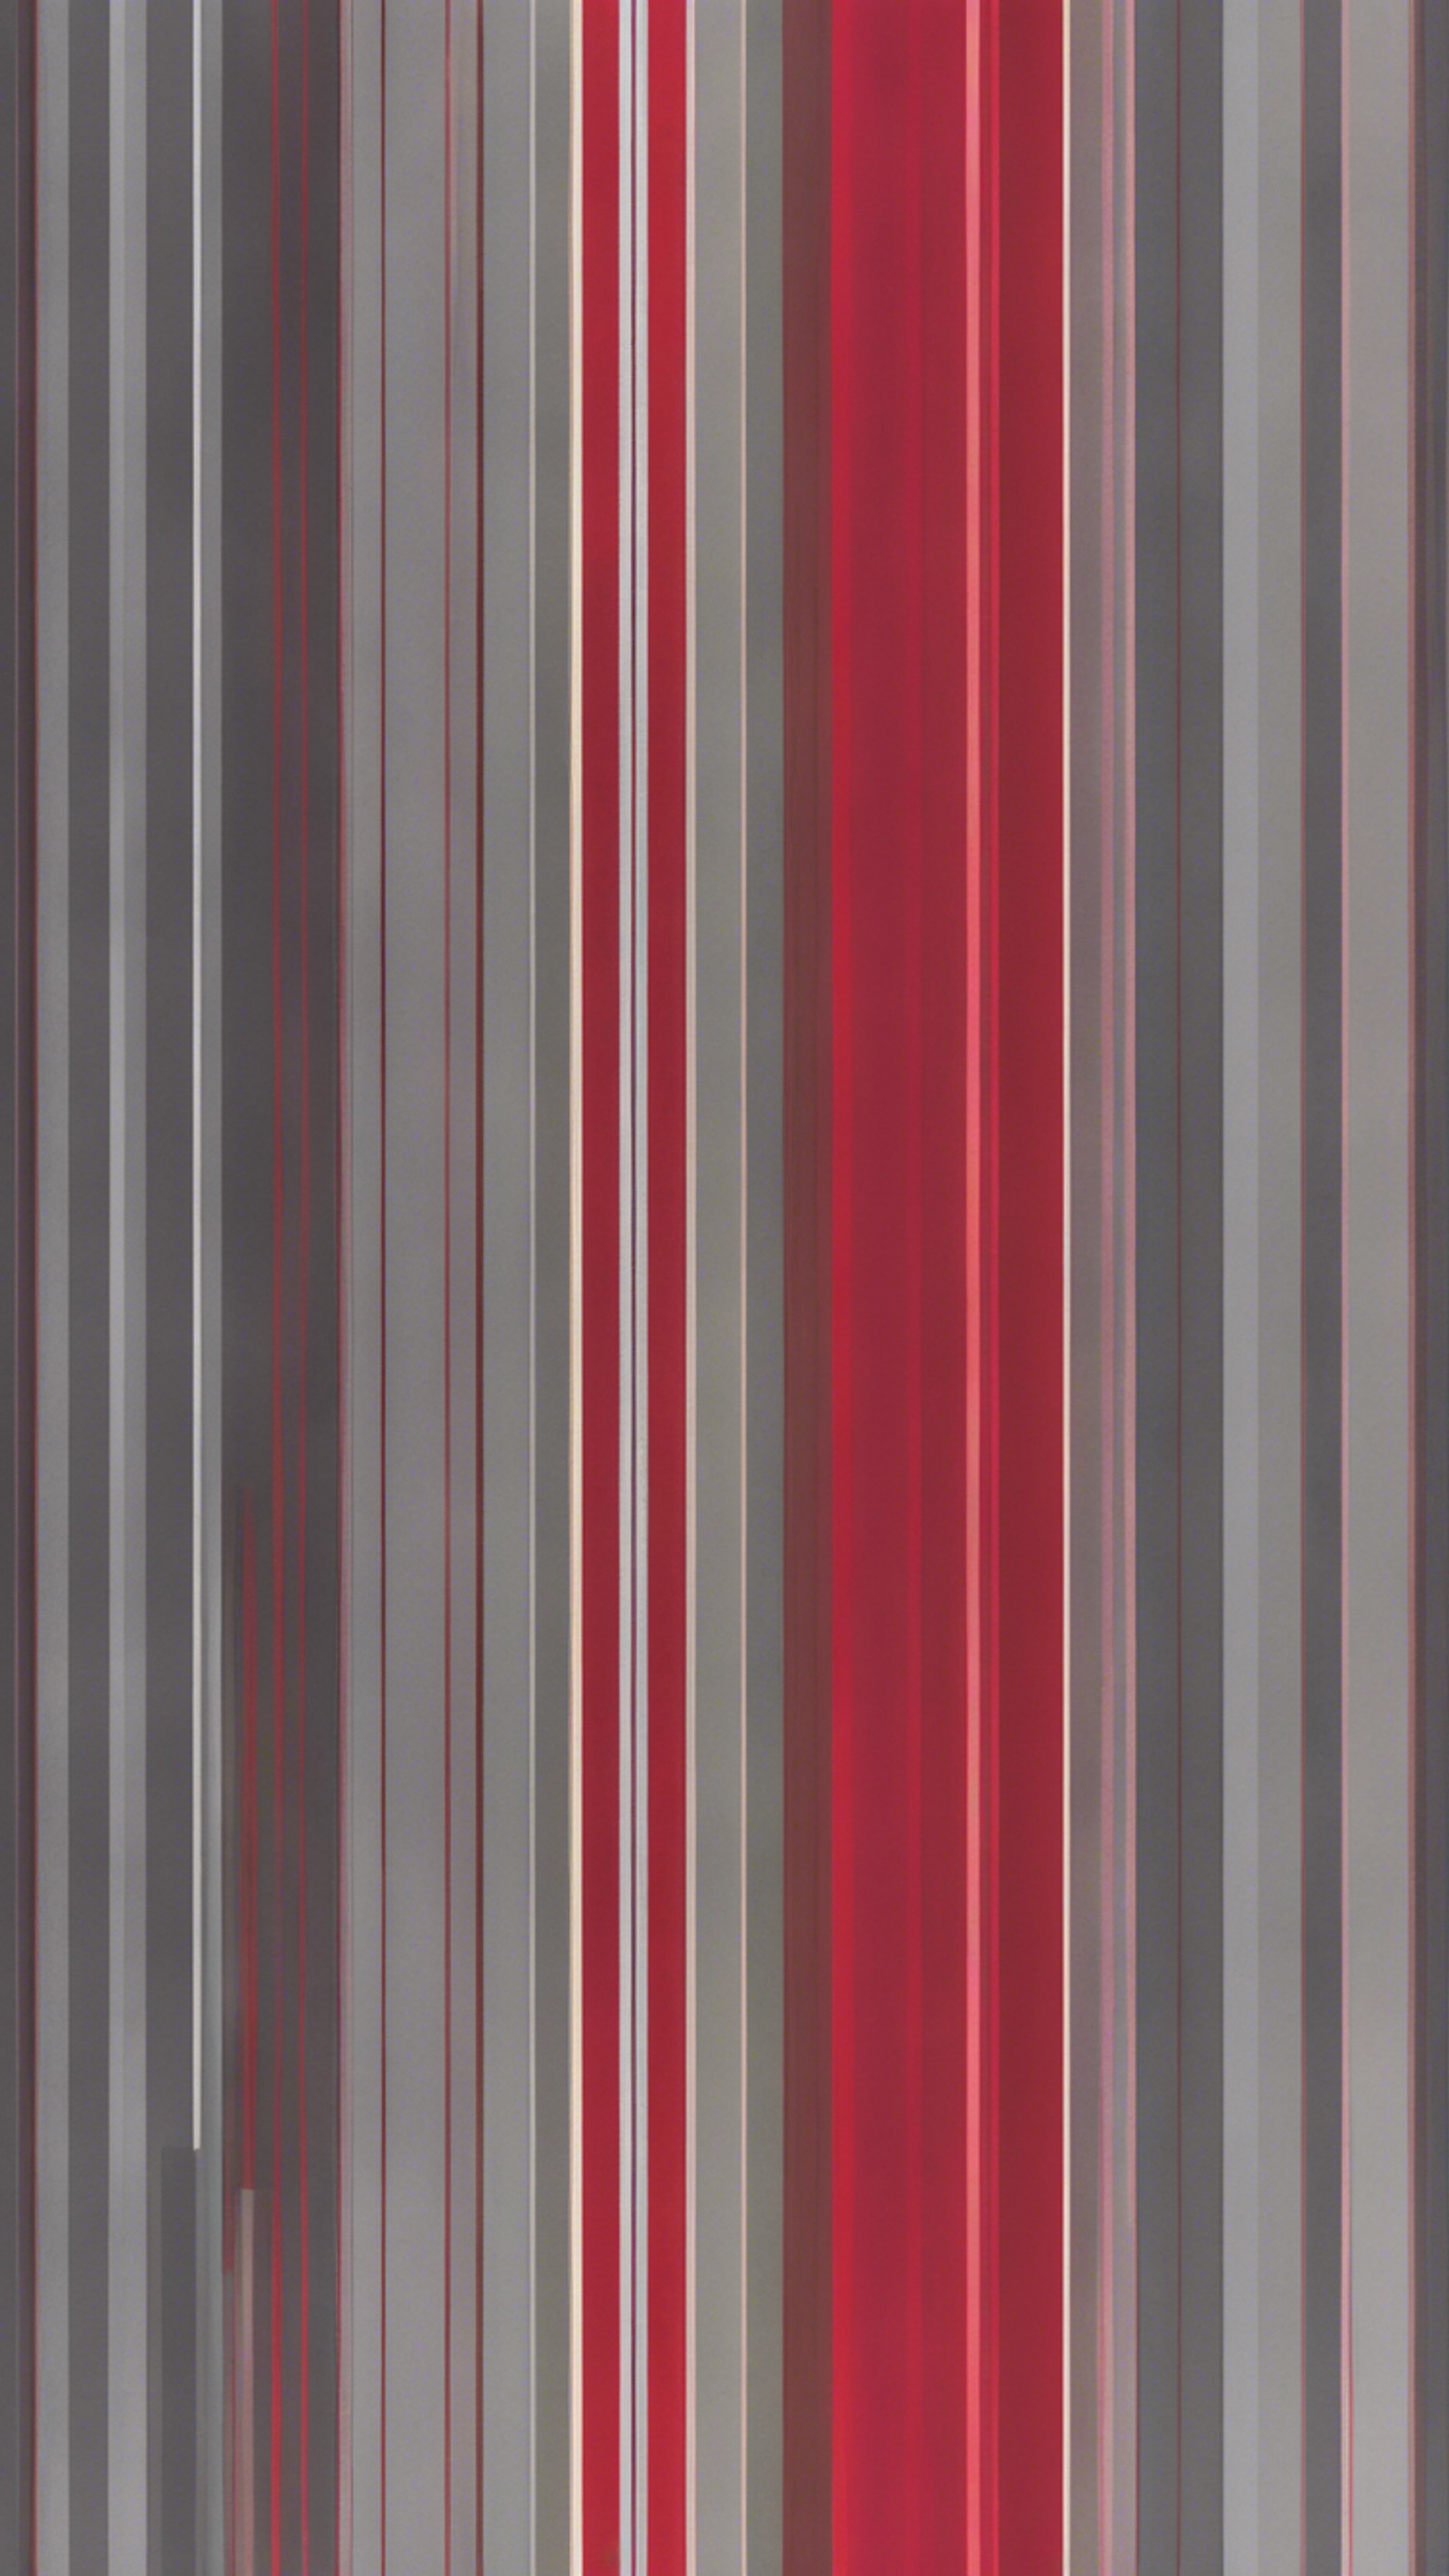 Pattern inspired by modern art, showcasing alternating bands of red and grey in a gradient arrangement. duvar kağıdı[fecd92d91f0c4817b510]